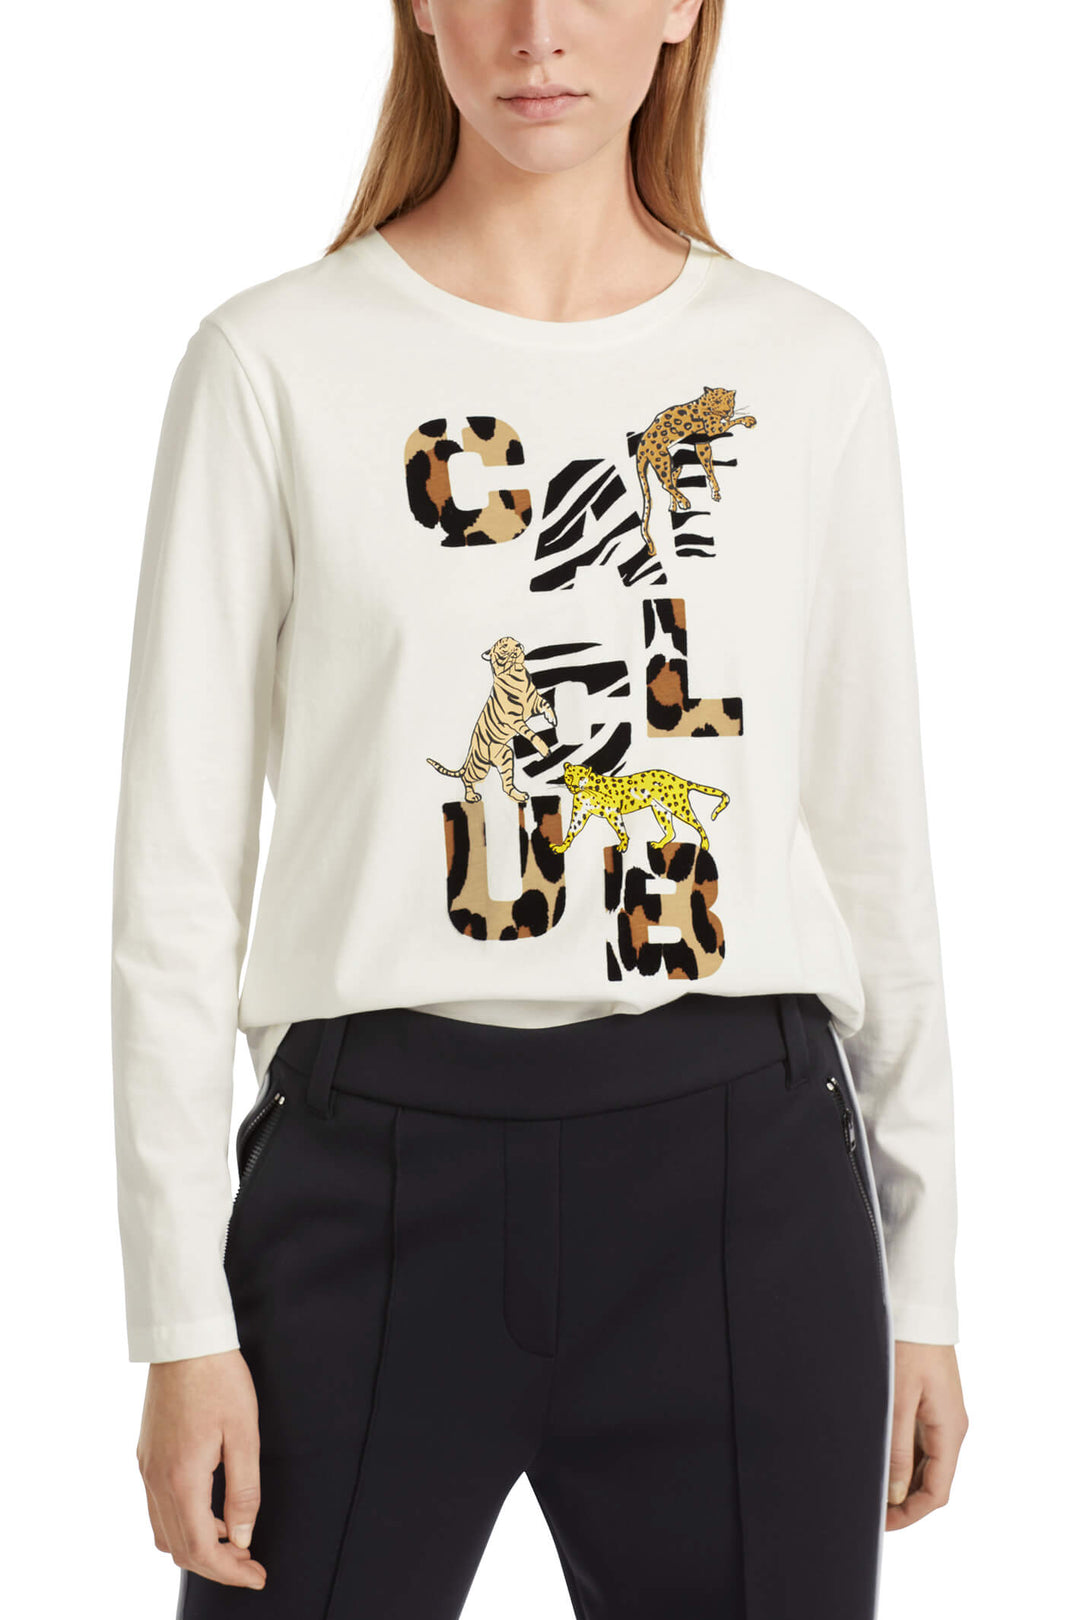 Marc Cain Sports VS 48.40 J79 Off White Cat Club Long Sleeve T-Shirt - Olivia Grace Fashion